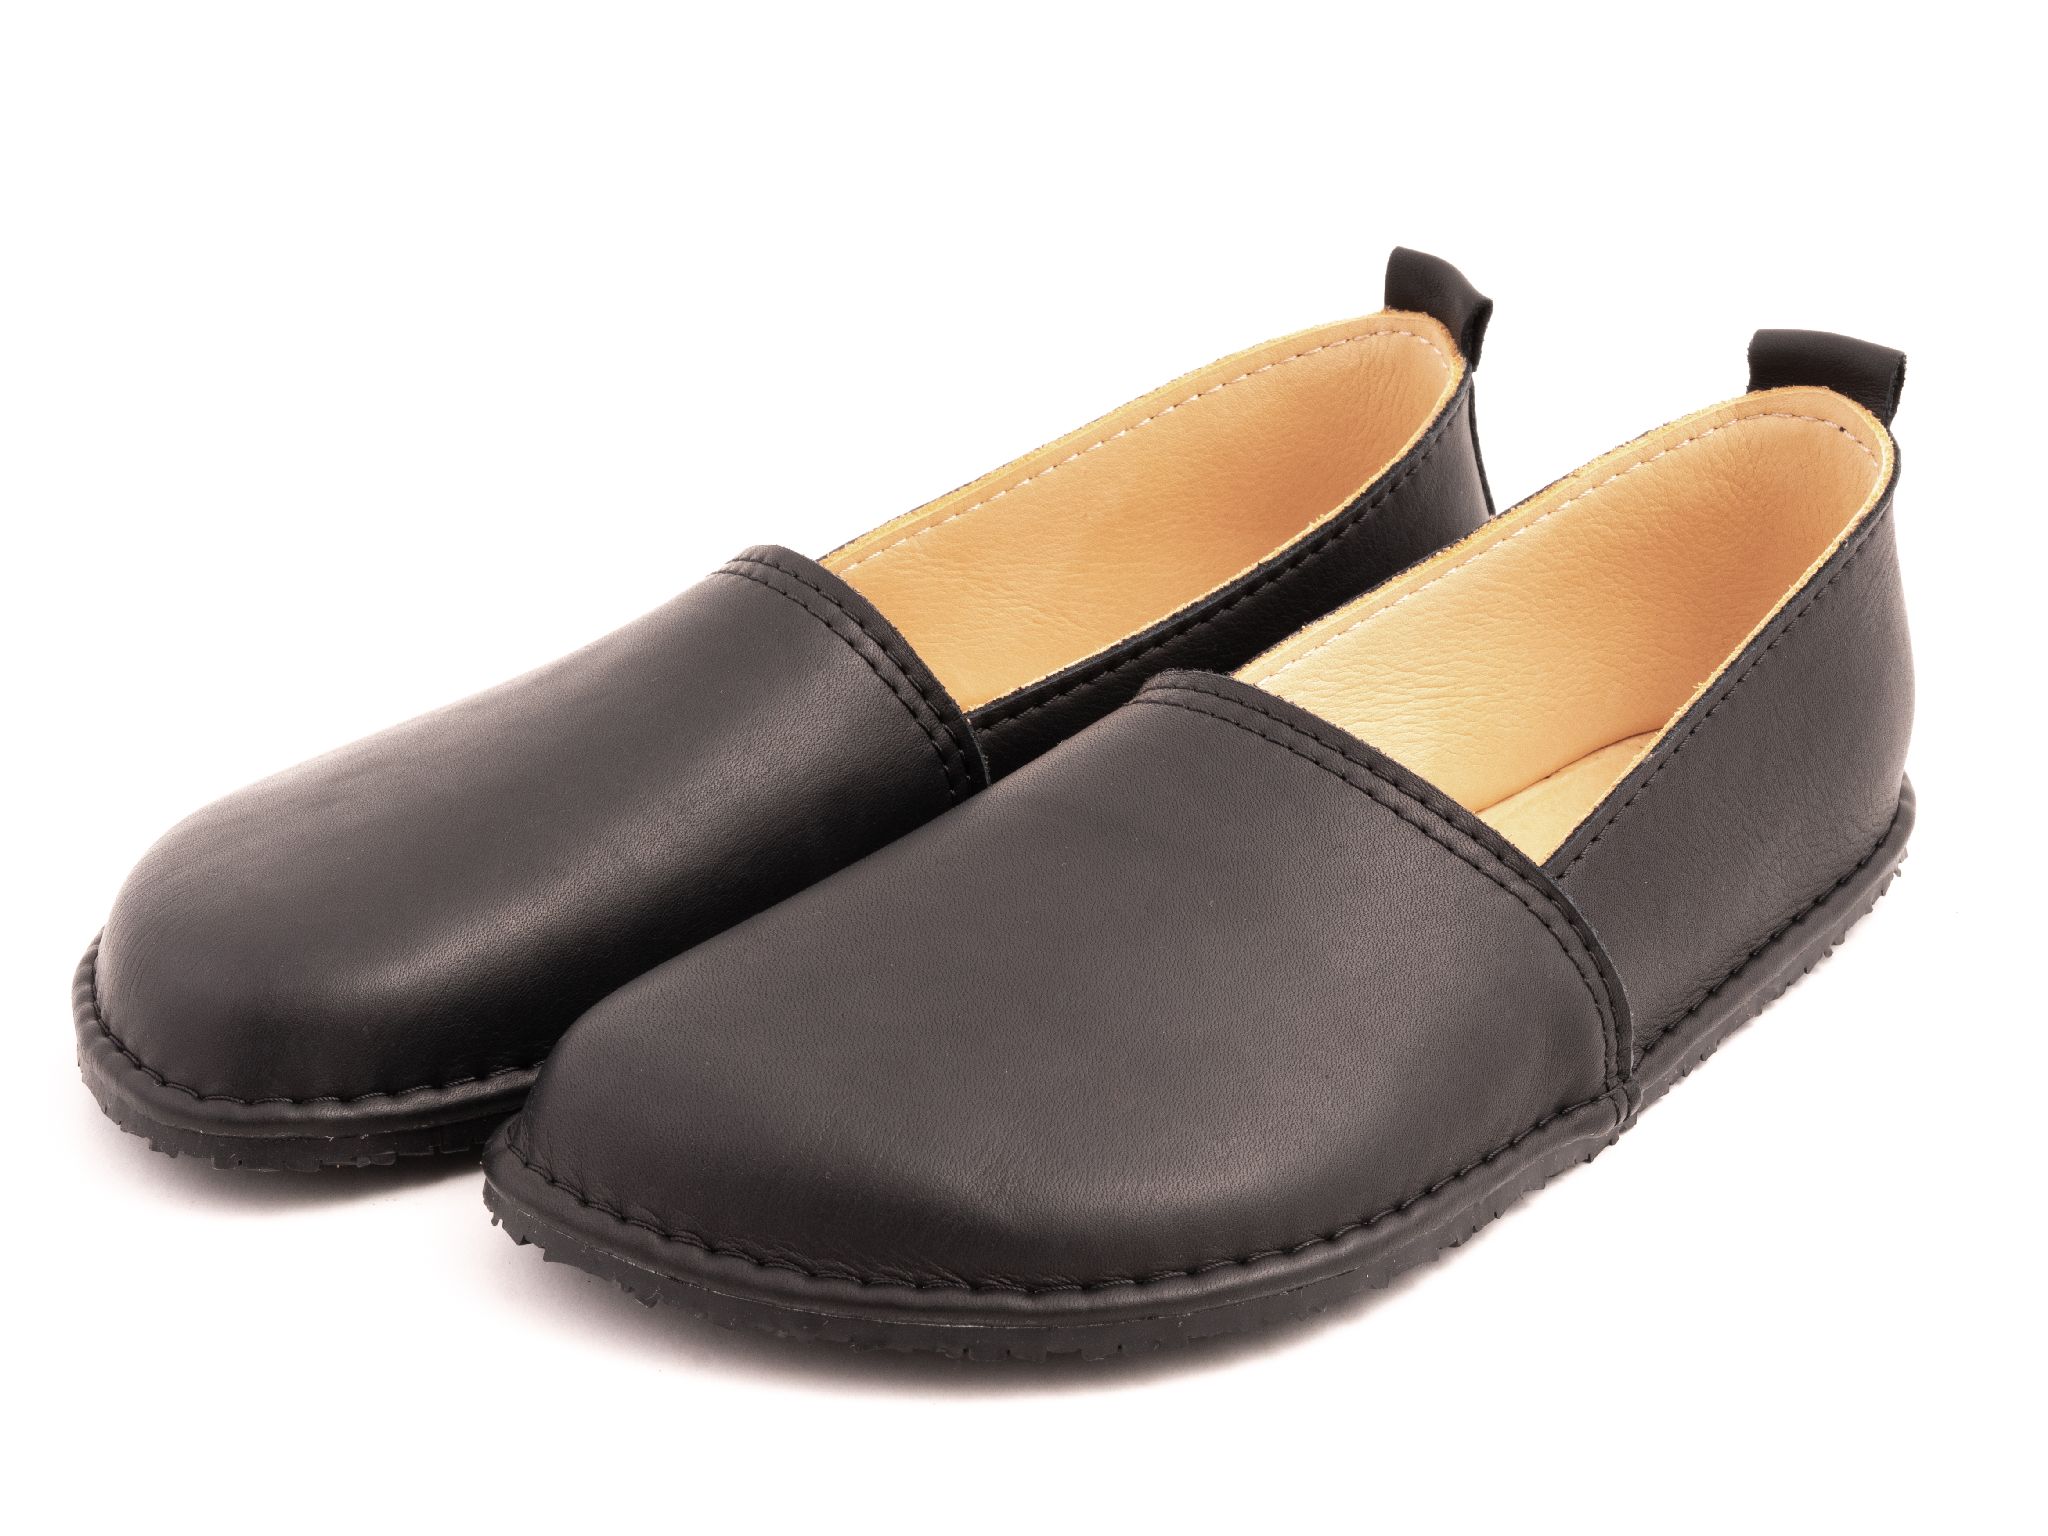 Fuego Barefoot moccasins - black - Luks Shoes